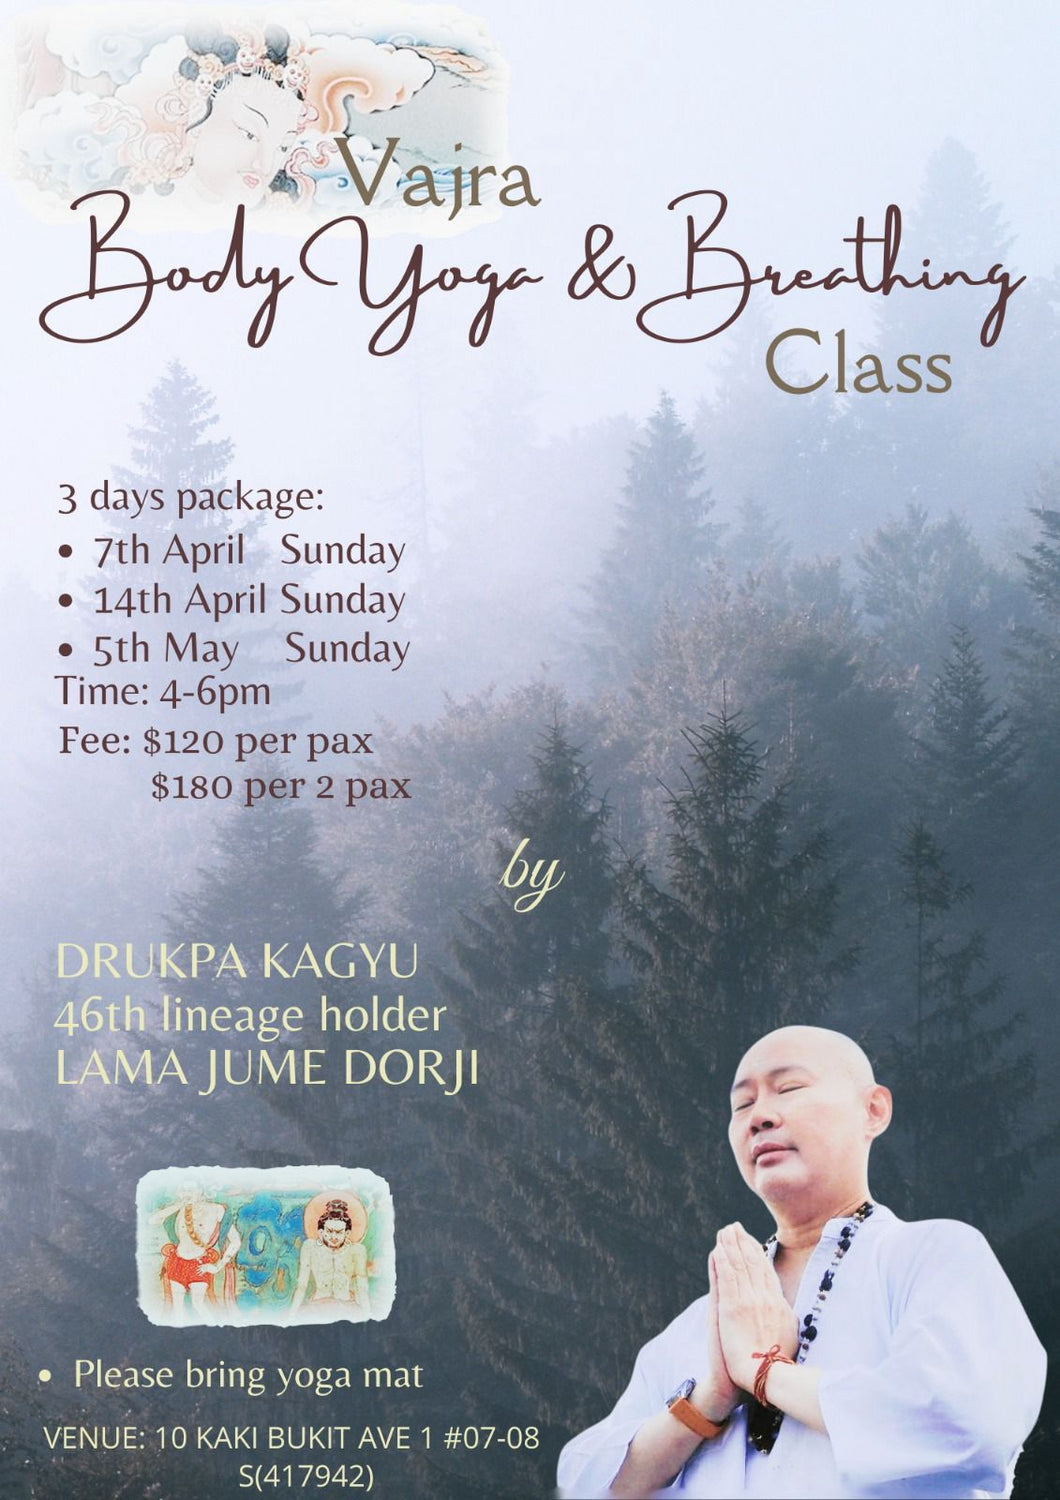 Vajra Body Yoga & Breathing Class